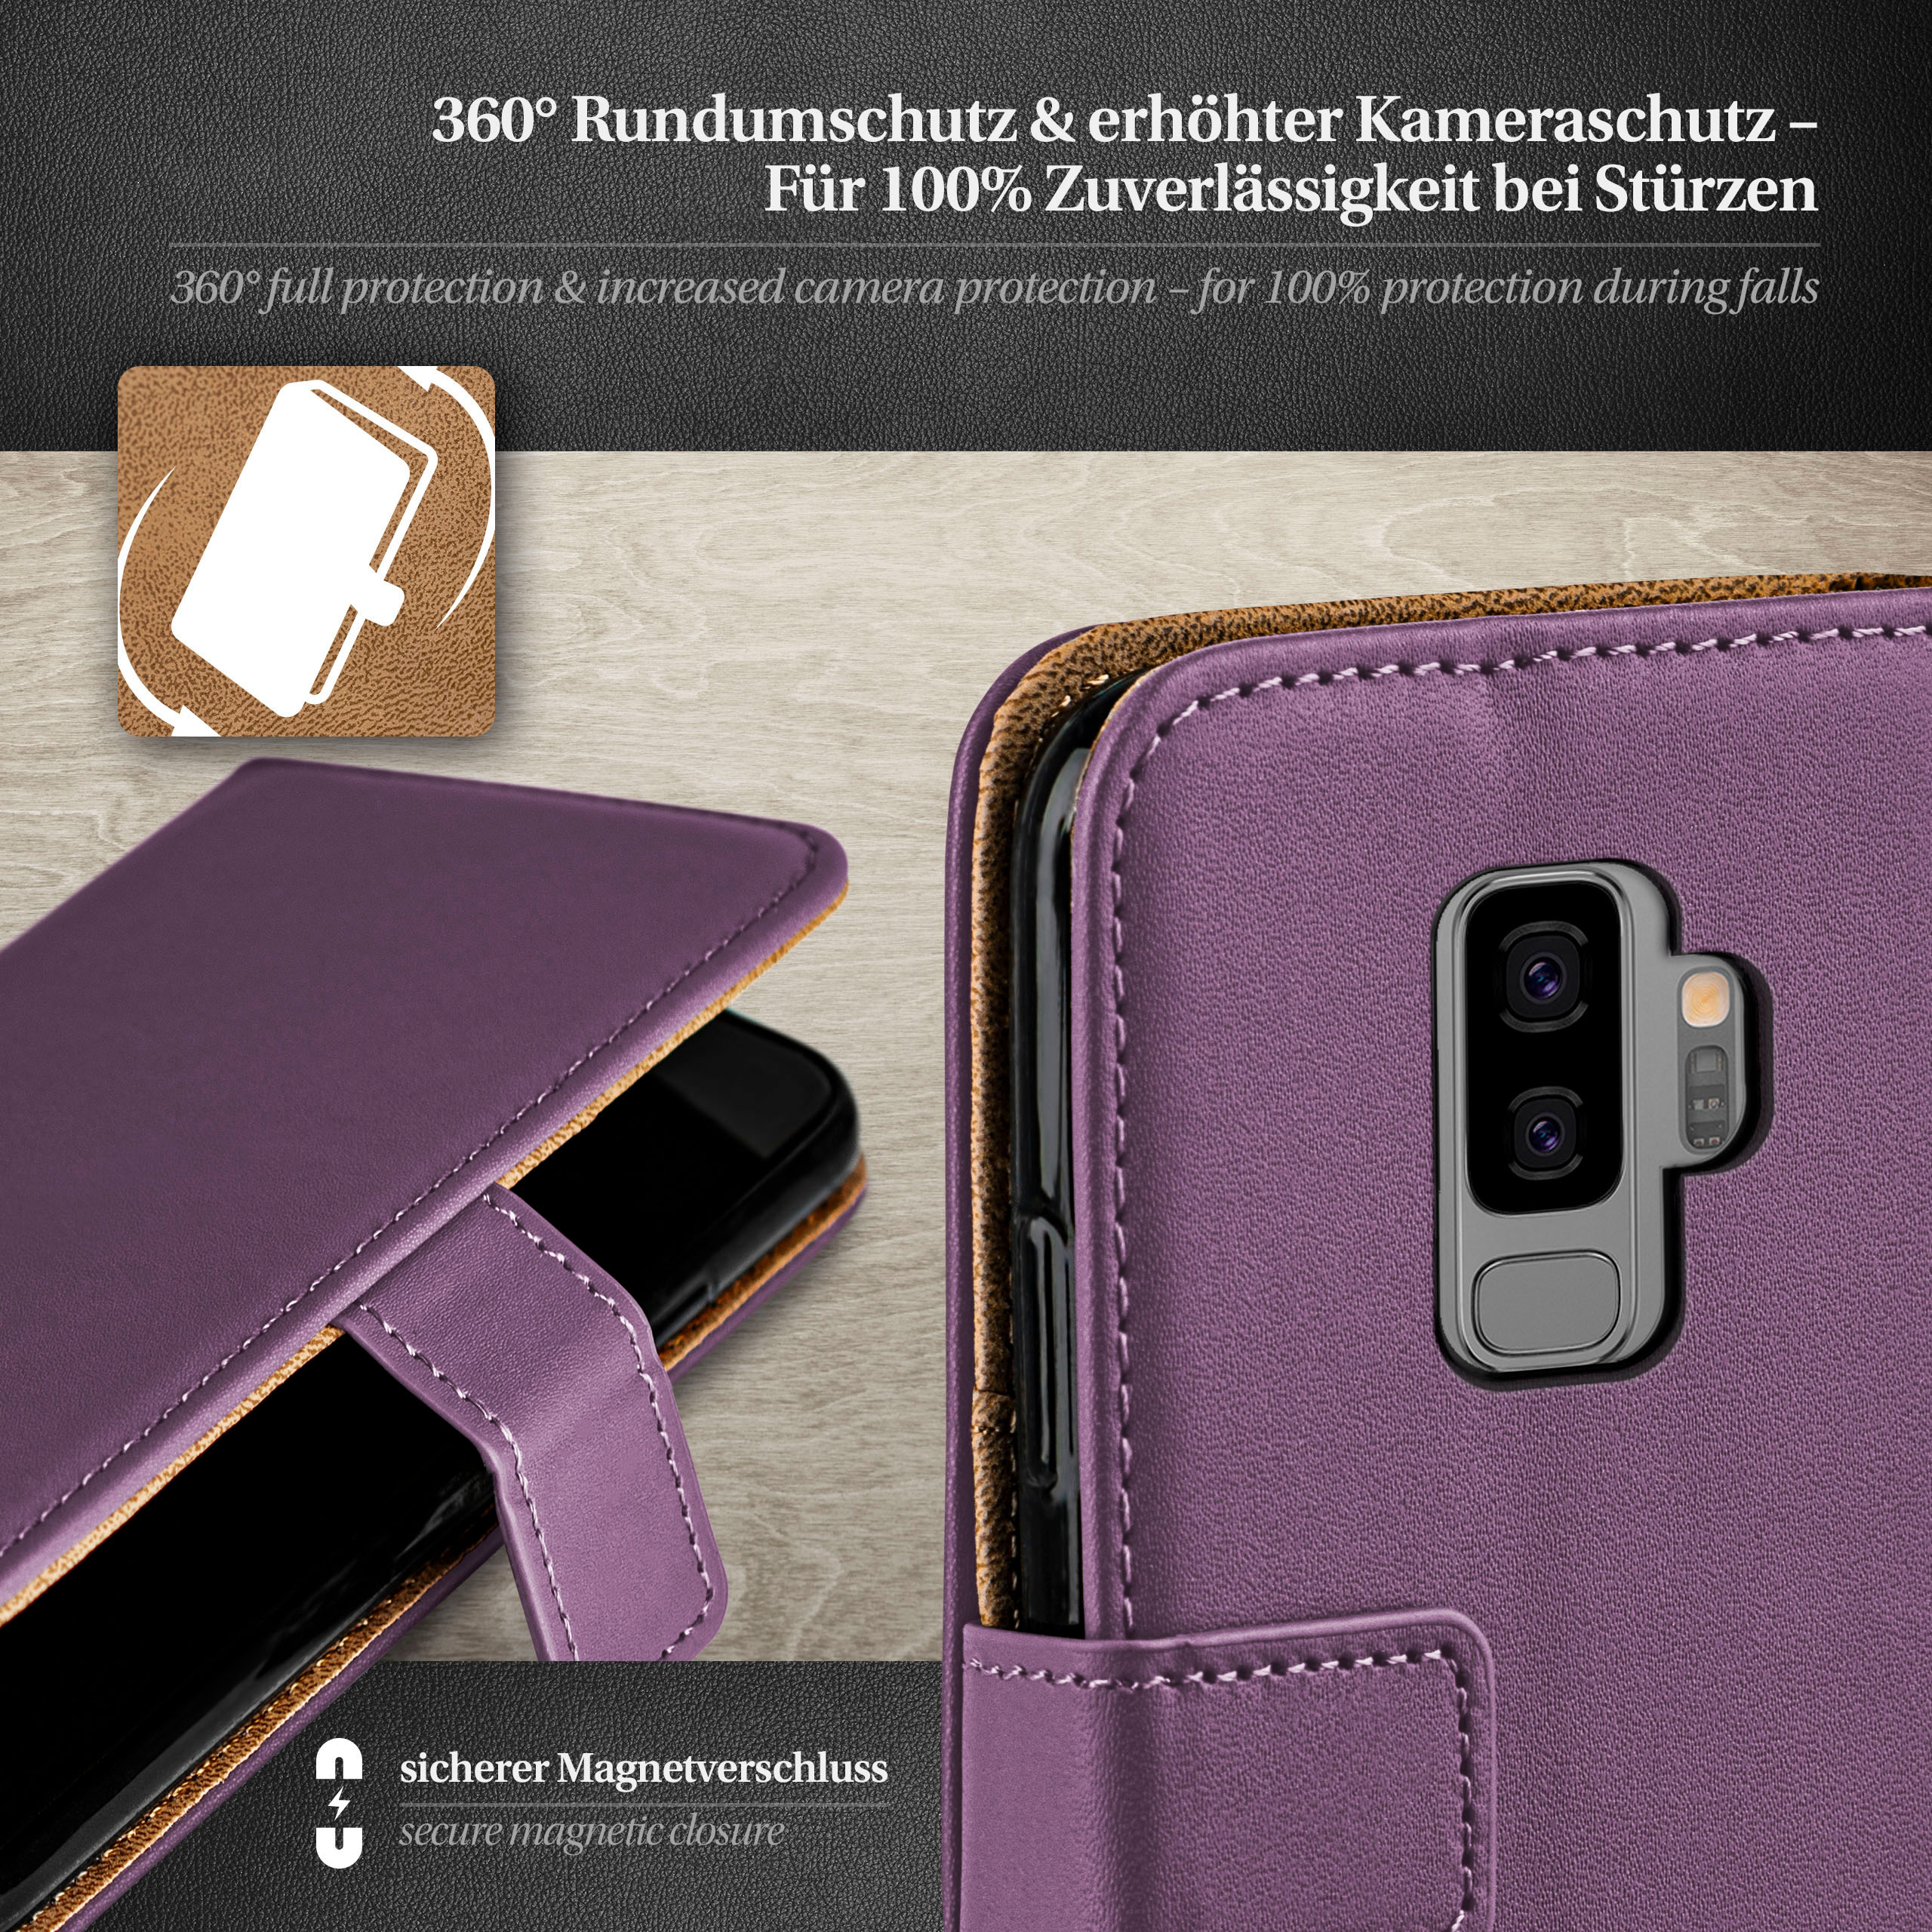 Case, Plus, S9 Book MOEX Galaxy Samsung, Bookcover, Indigo-Violet